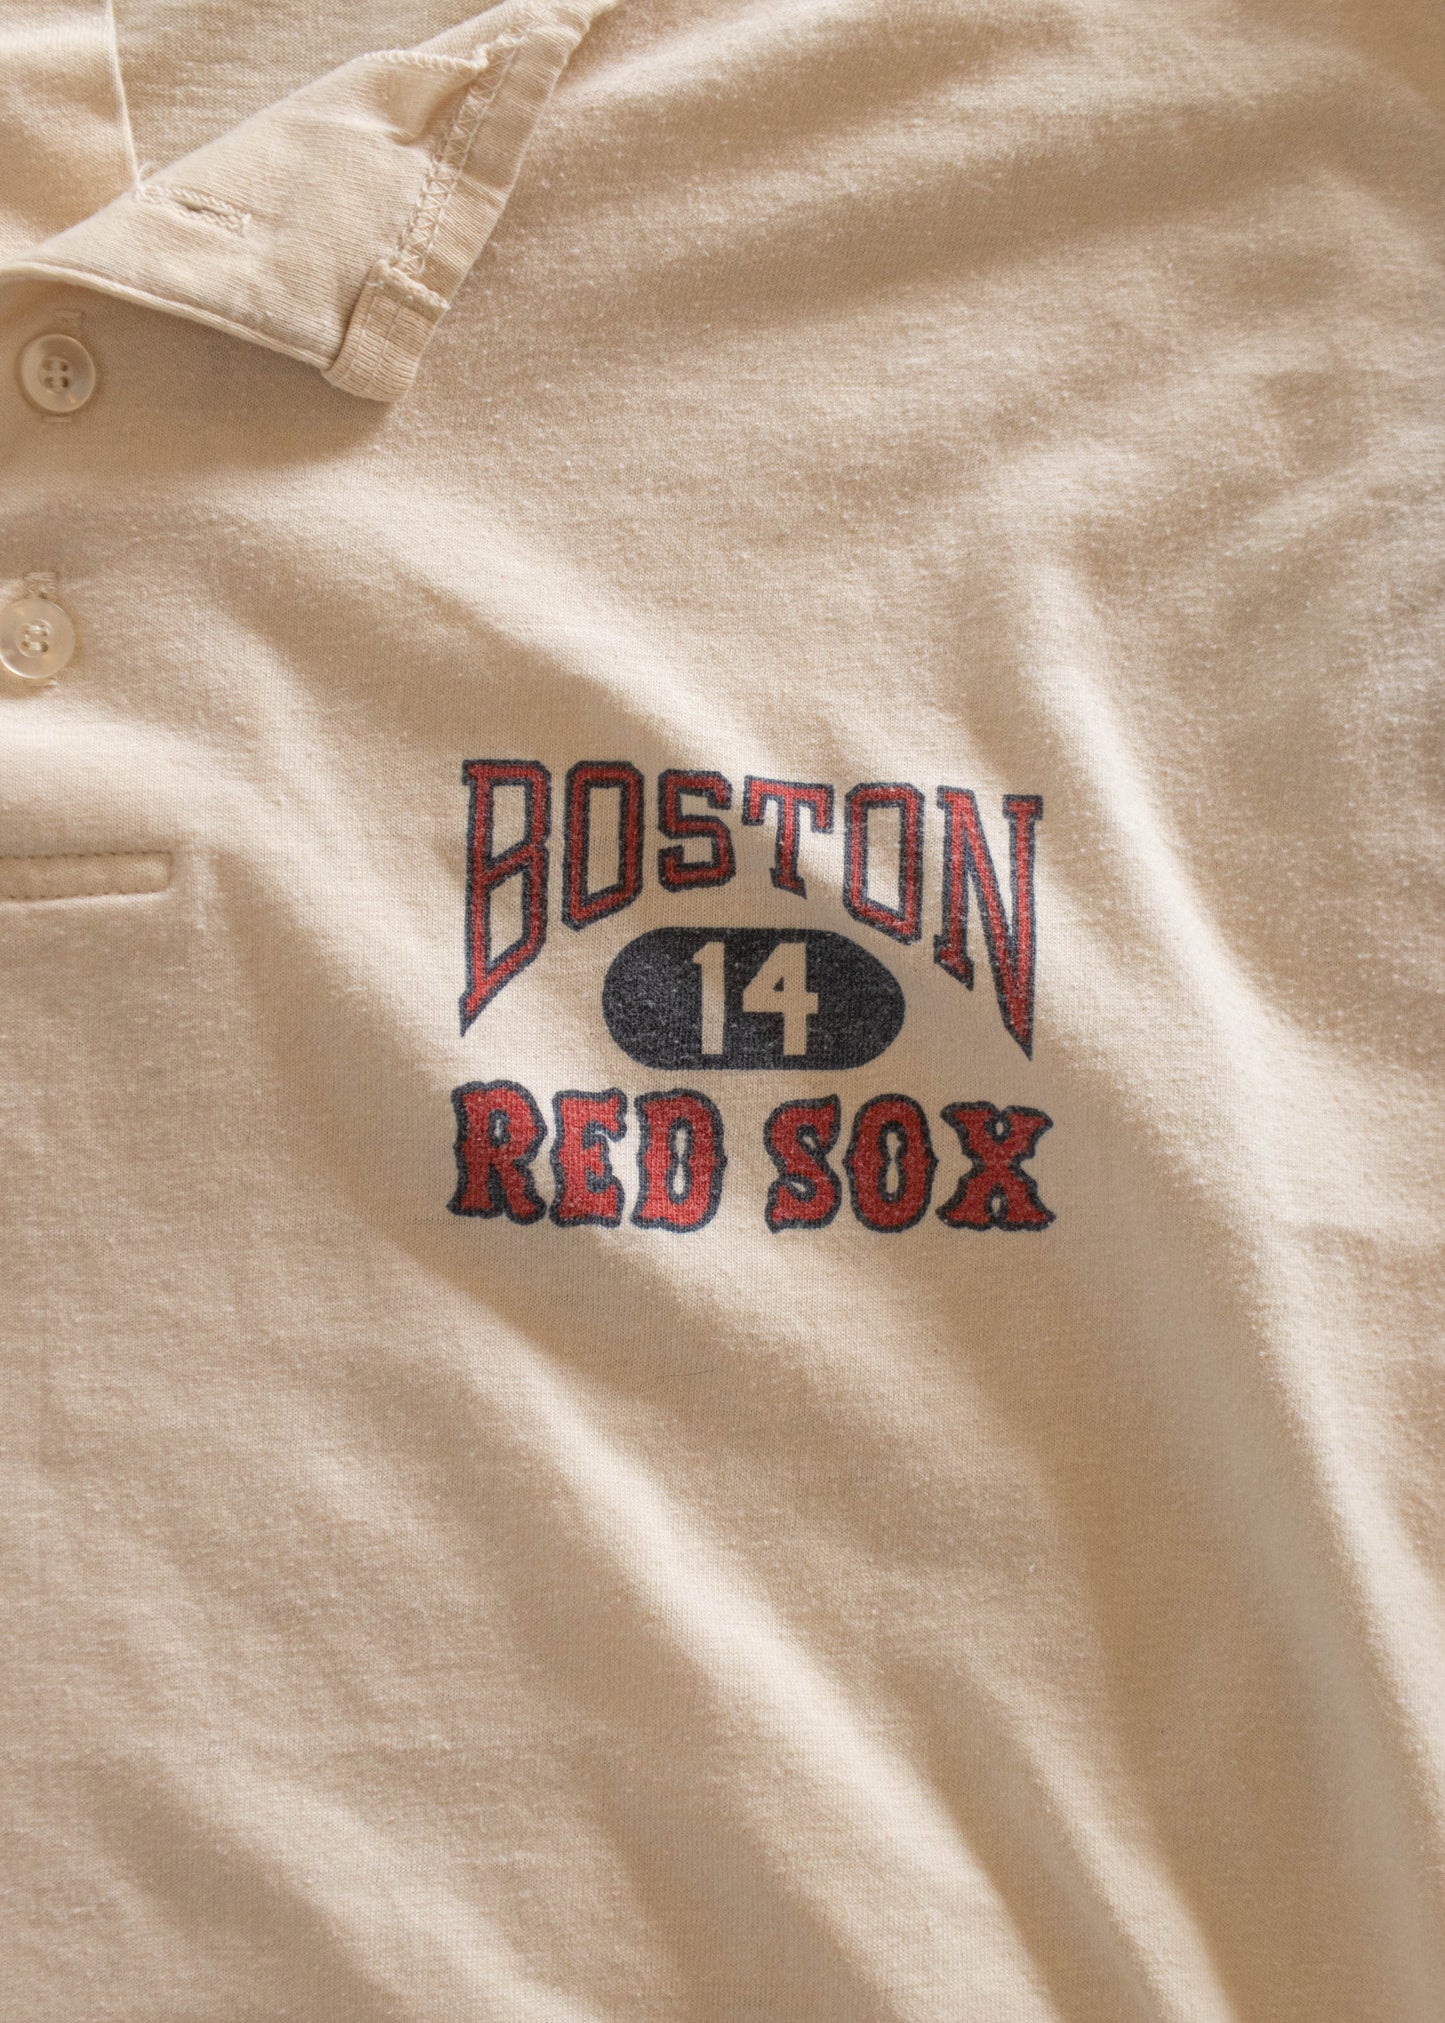 1980s Champion Boston Red Sox 3/4 Sleeve T-Shirt Size M/L